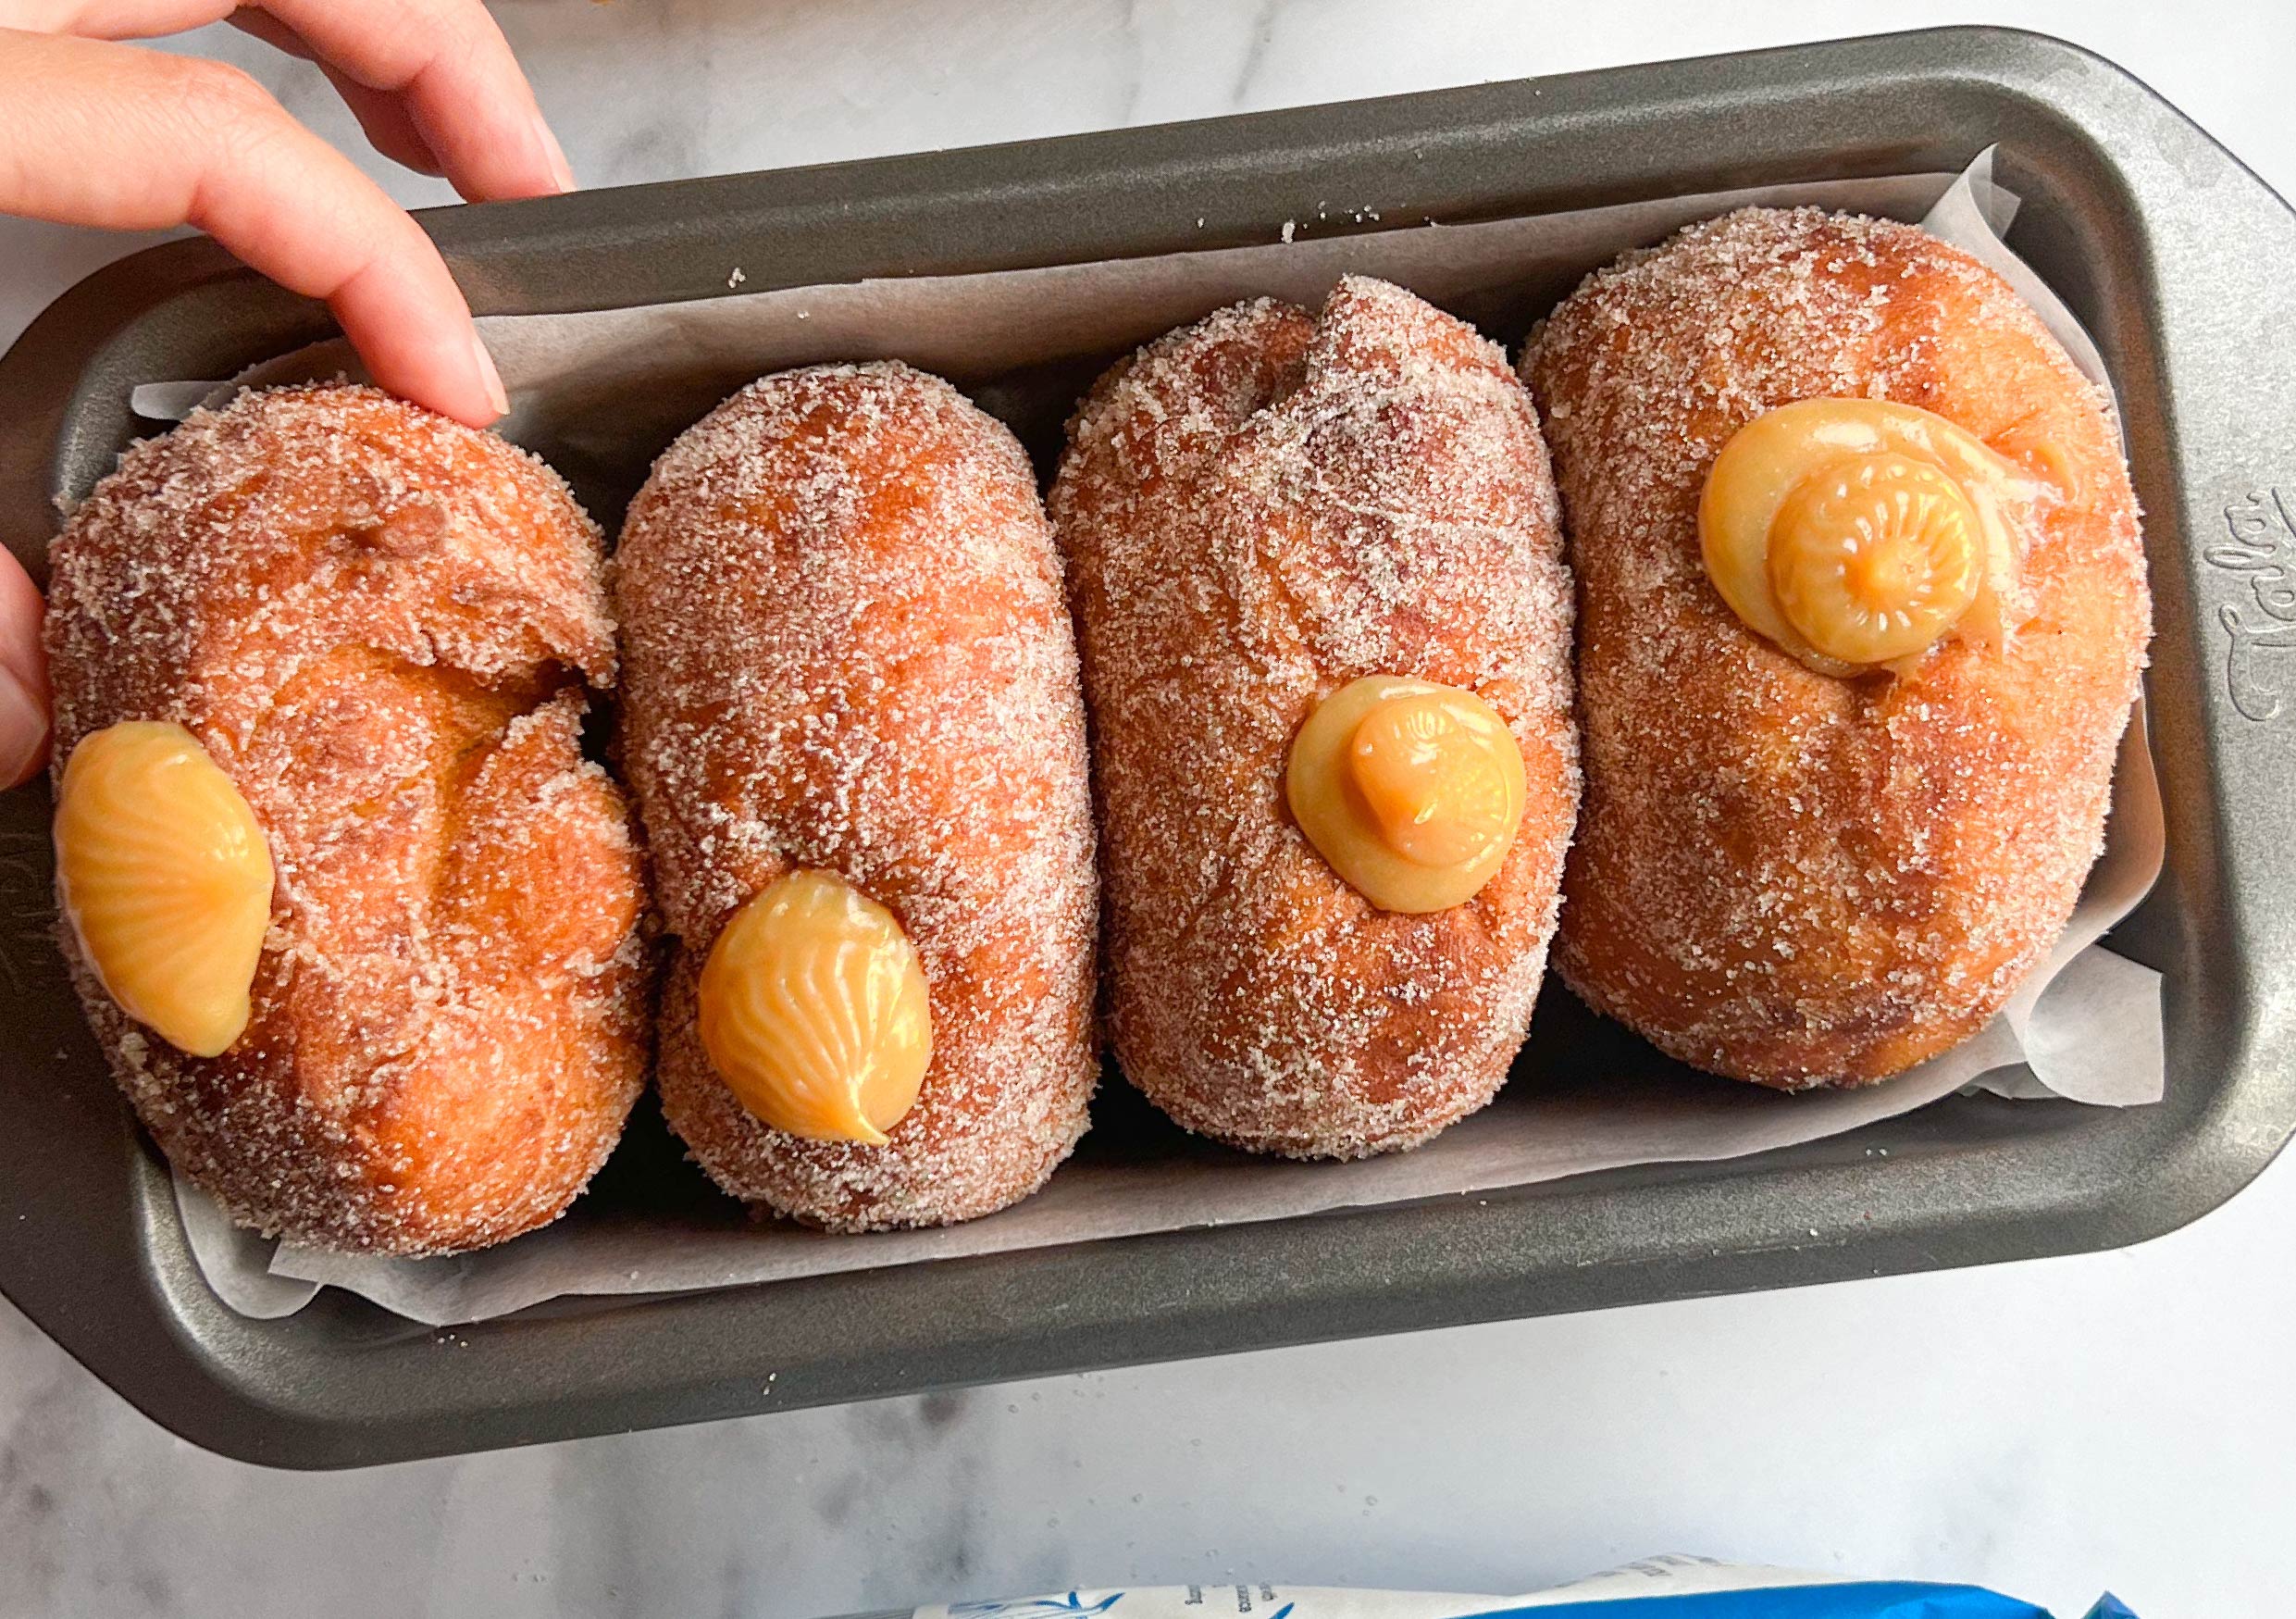 Caramel filled doughnuts